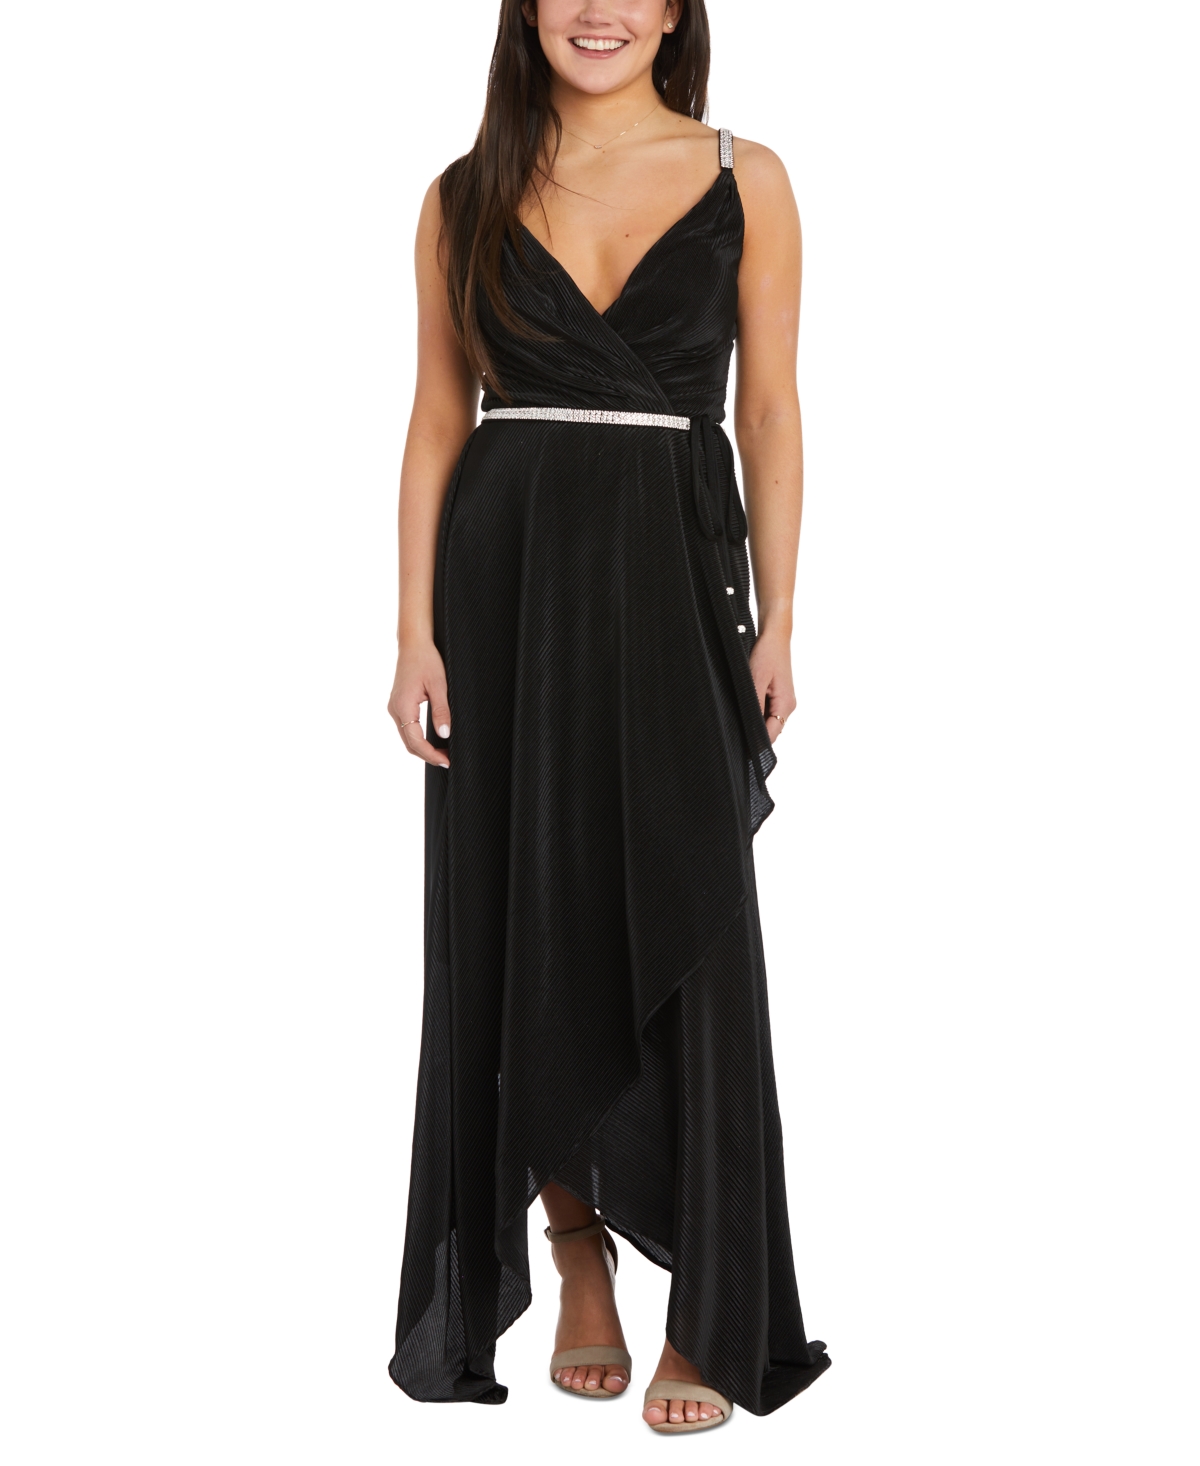 Women's Faux-Wrap Rhinestone-Trim Dress - Black